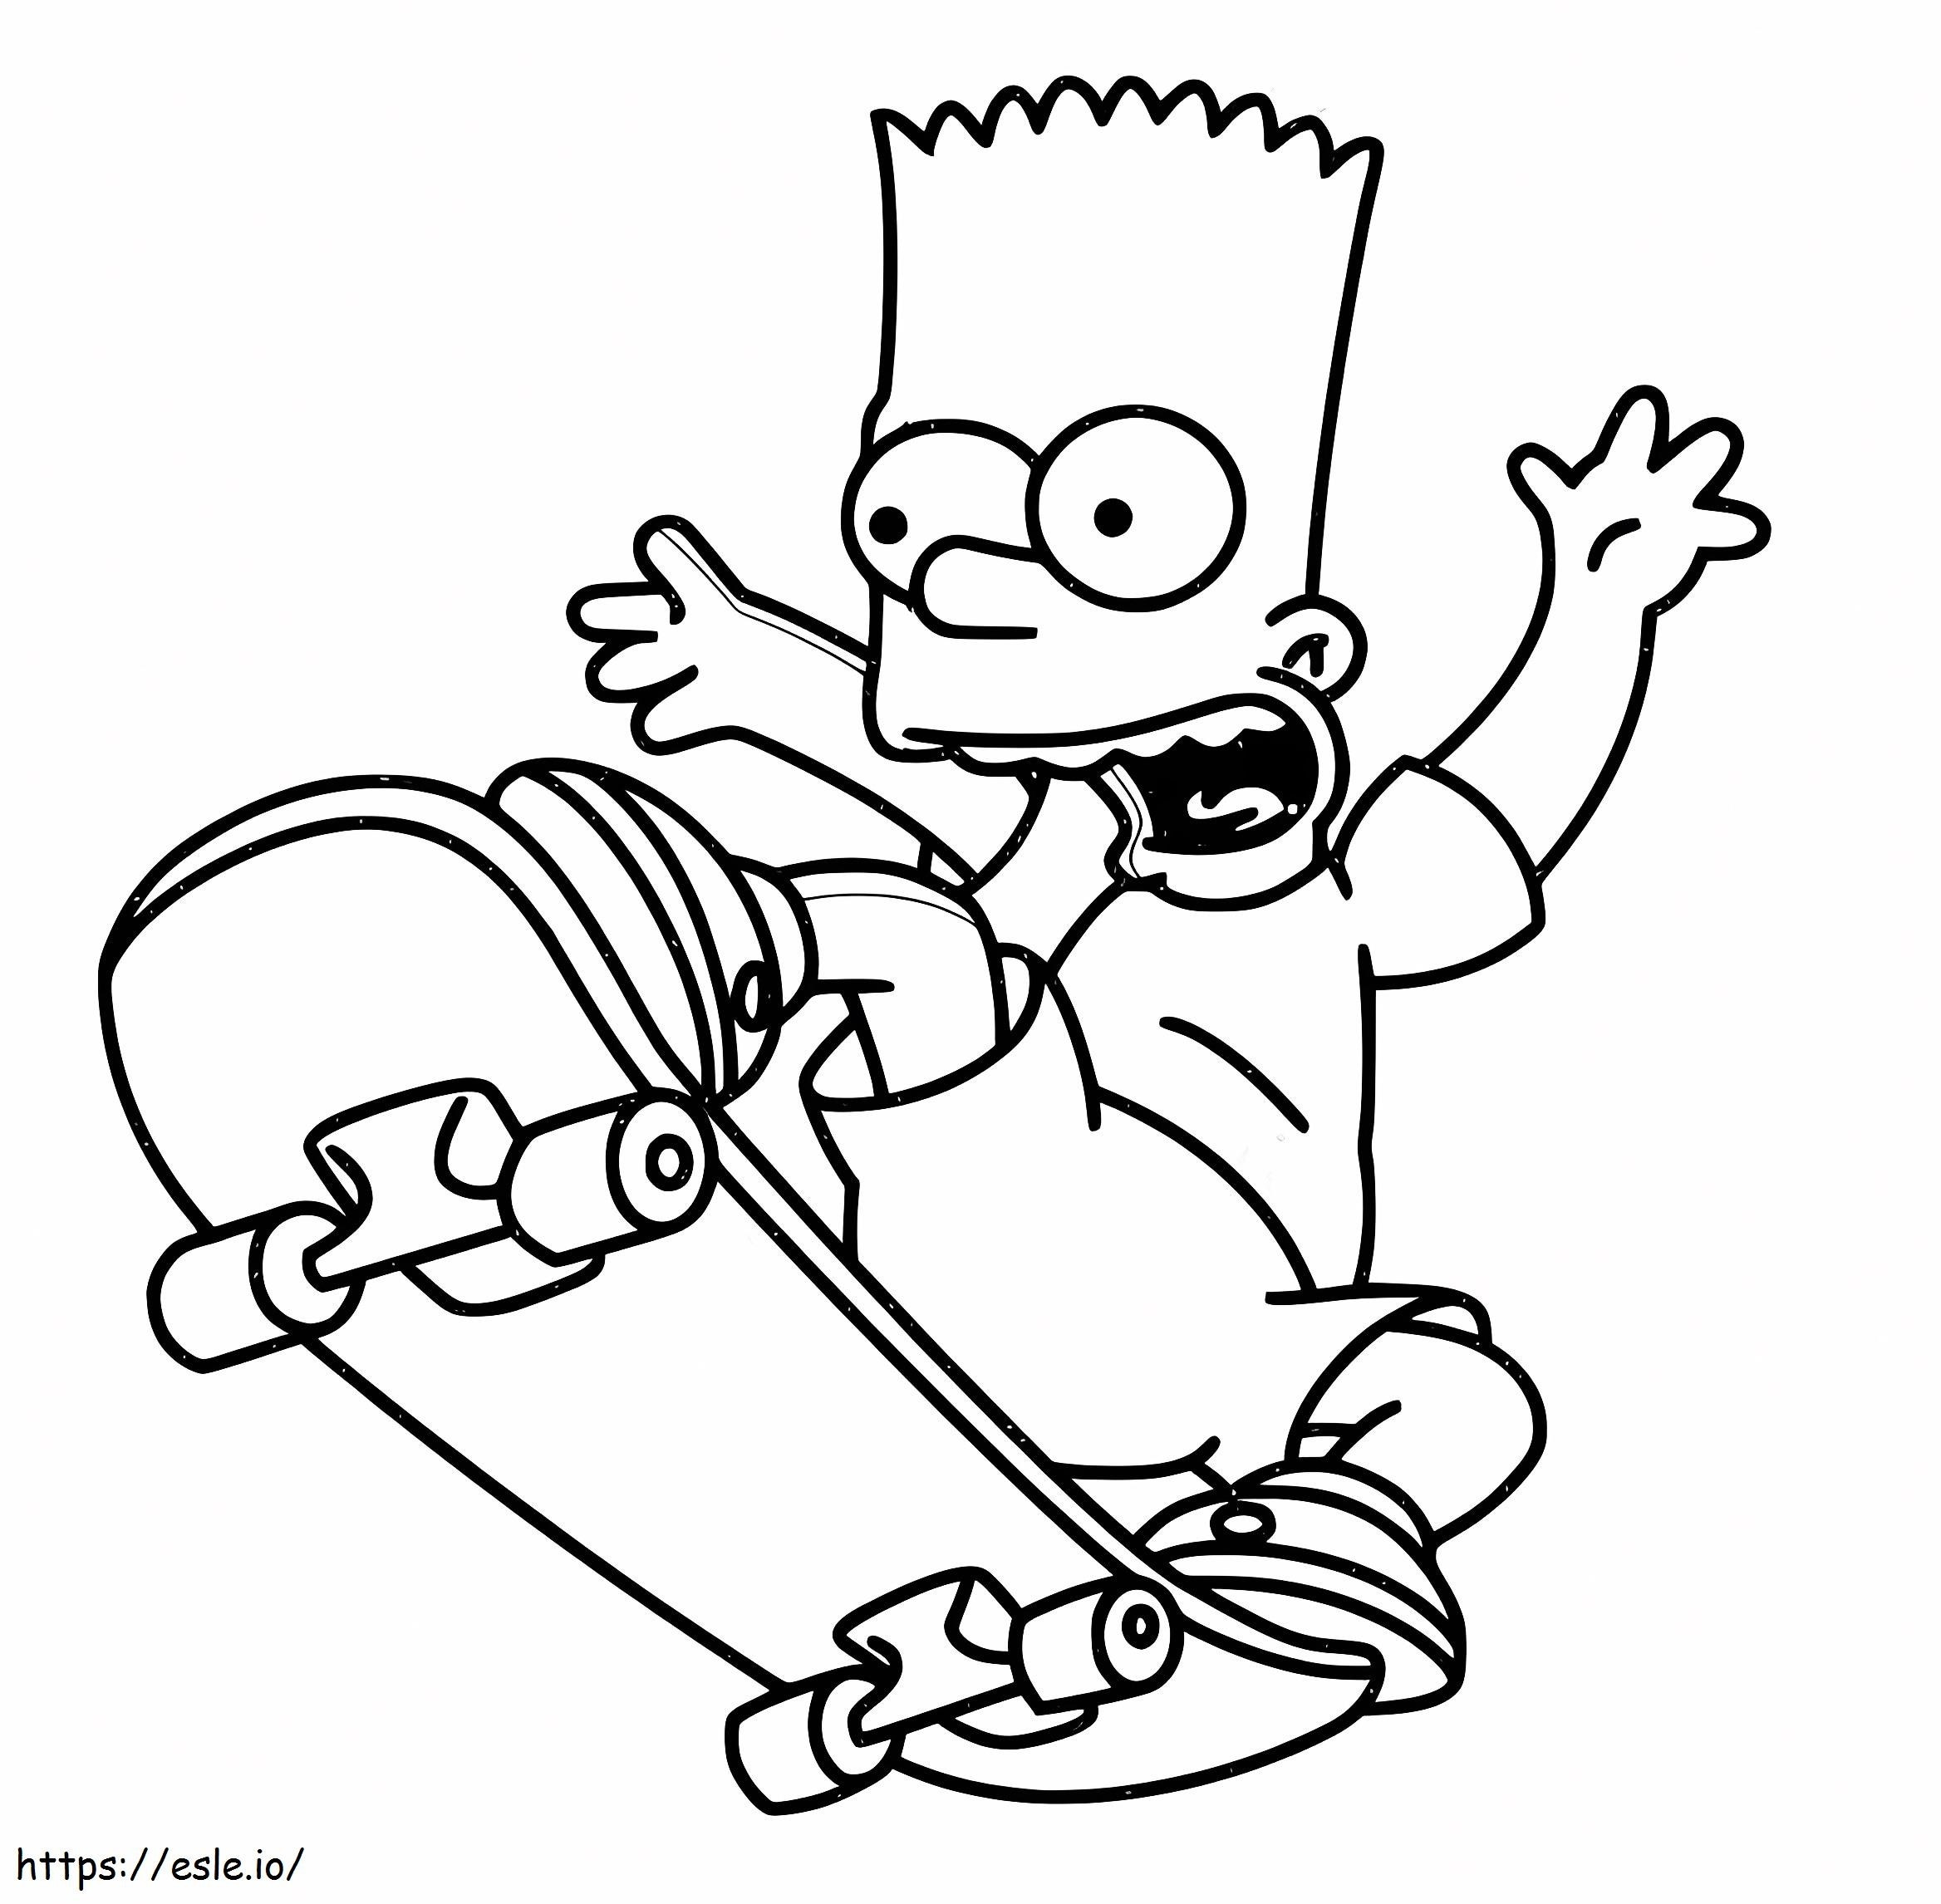 Coloriage 1532400701 Bart Simpson skateboard A4 à imprimer dessin